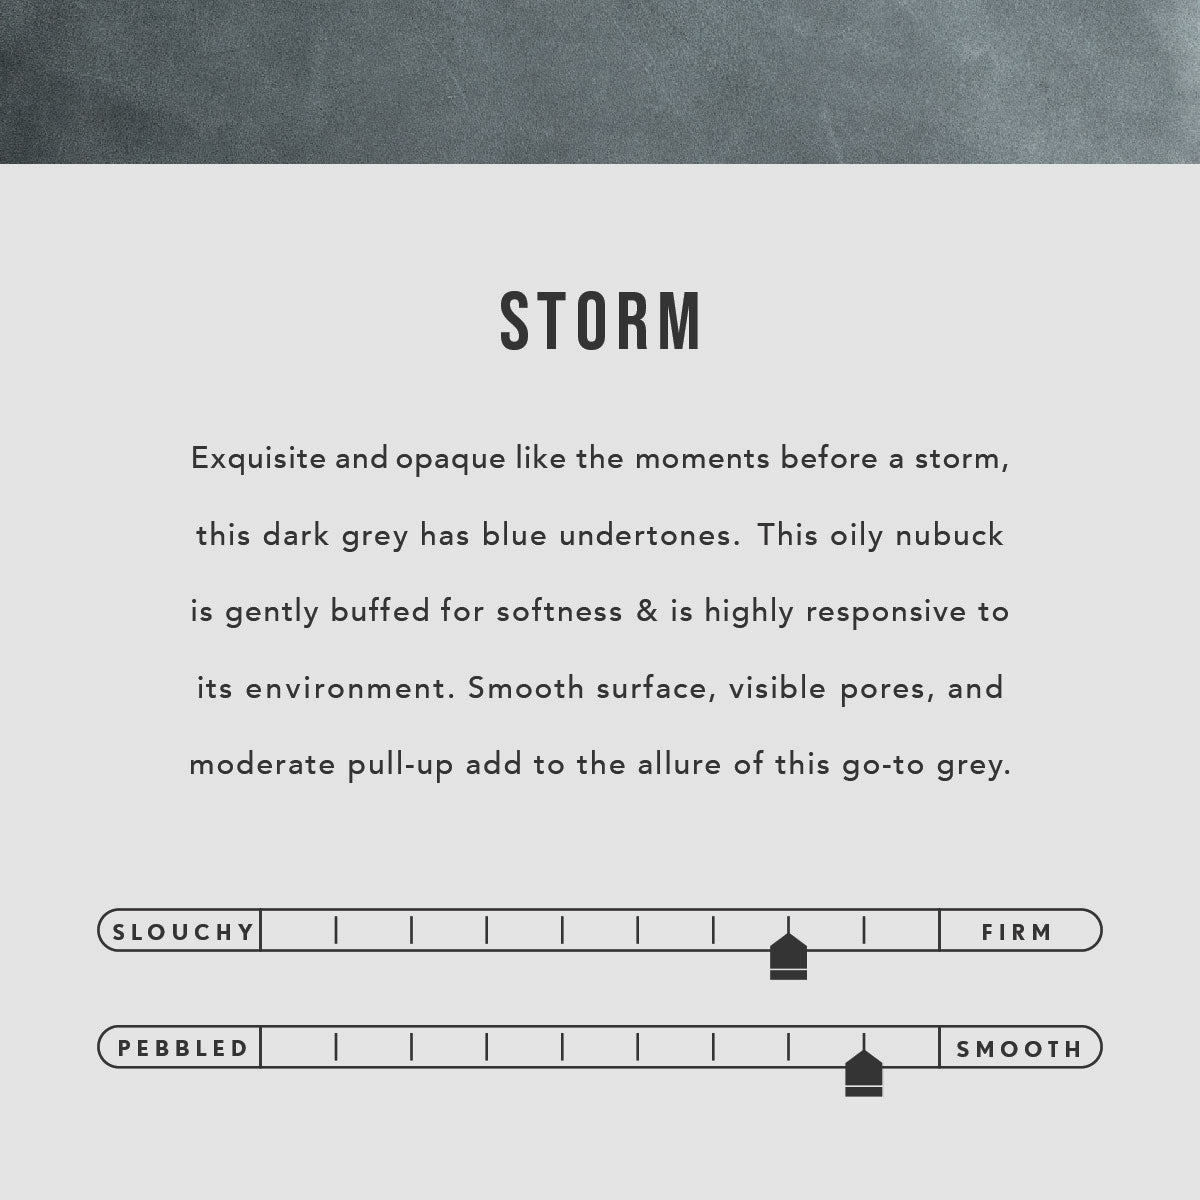 Storm | infographic